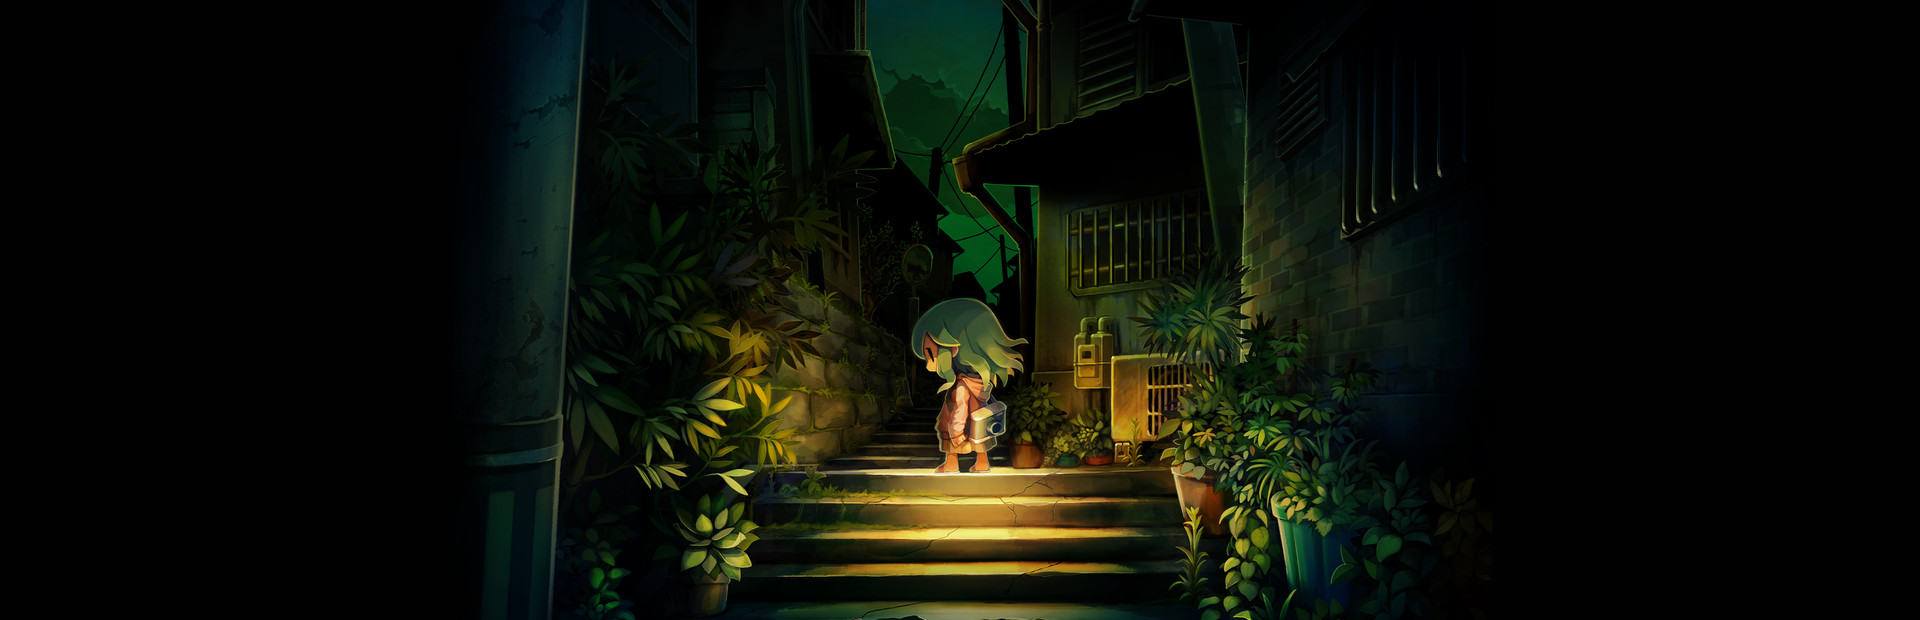 Yomawari: Lost in the Dark cover image